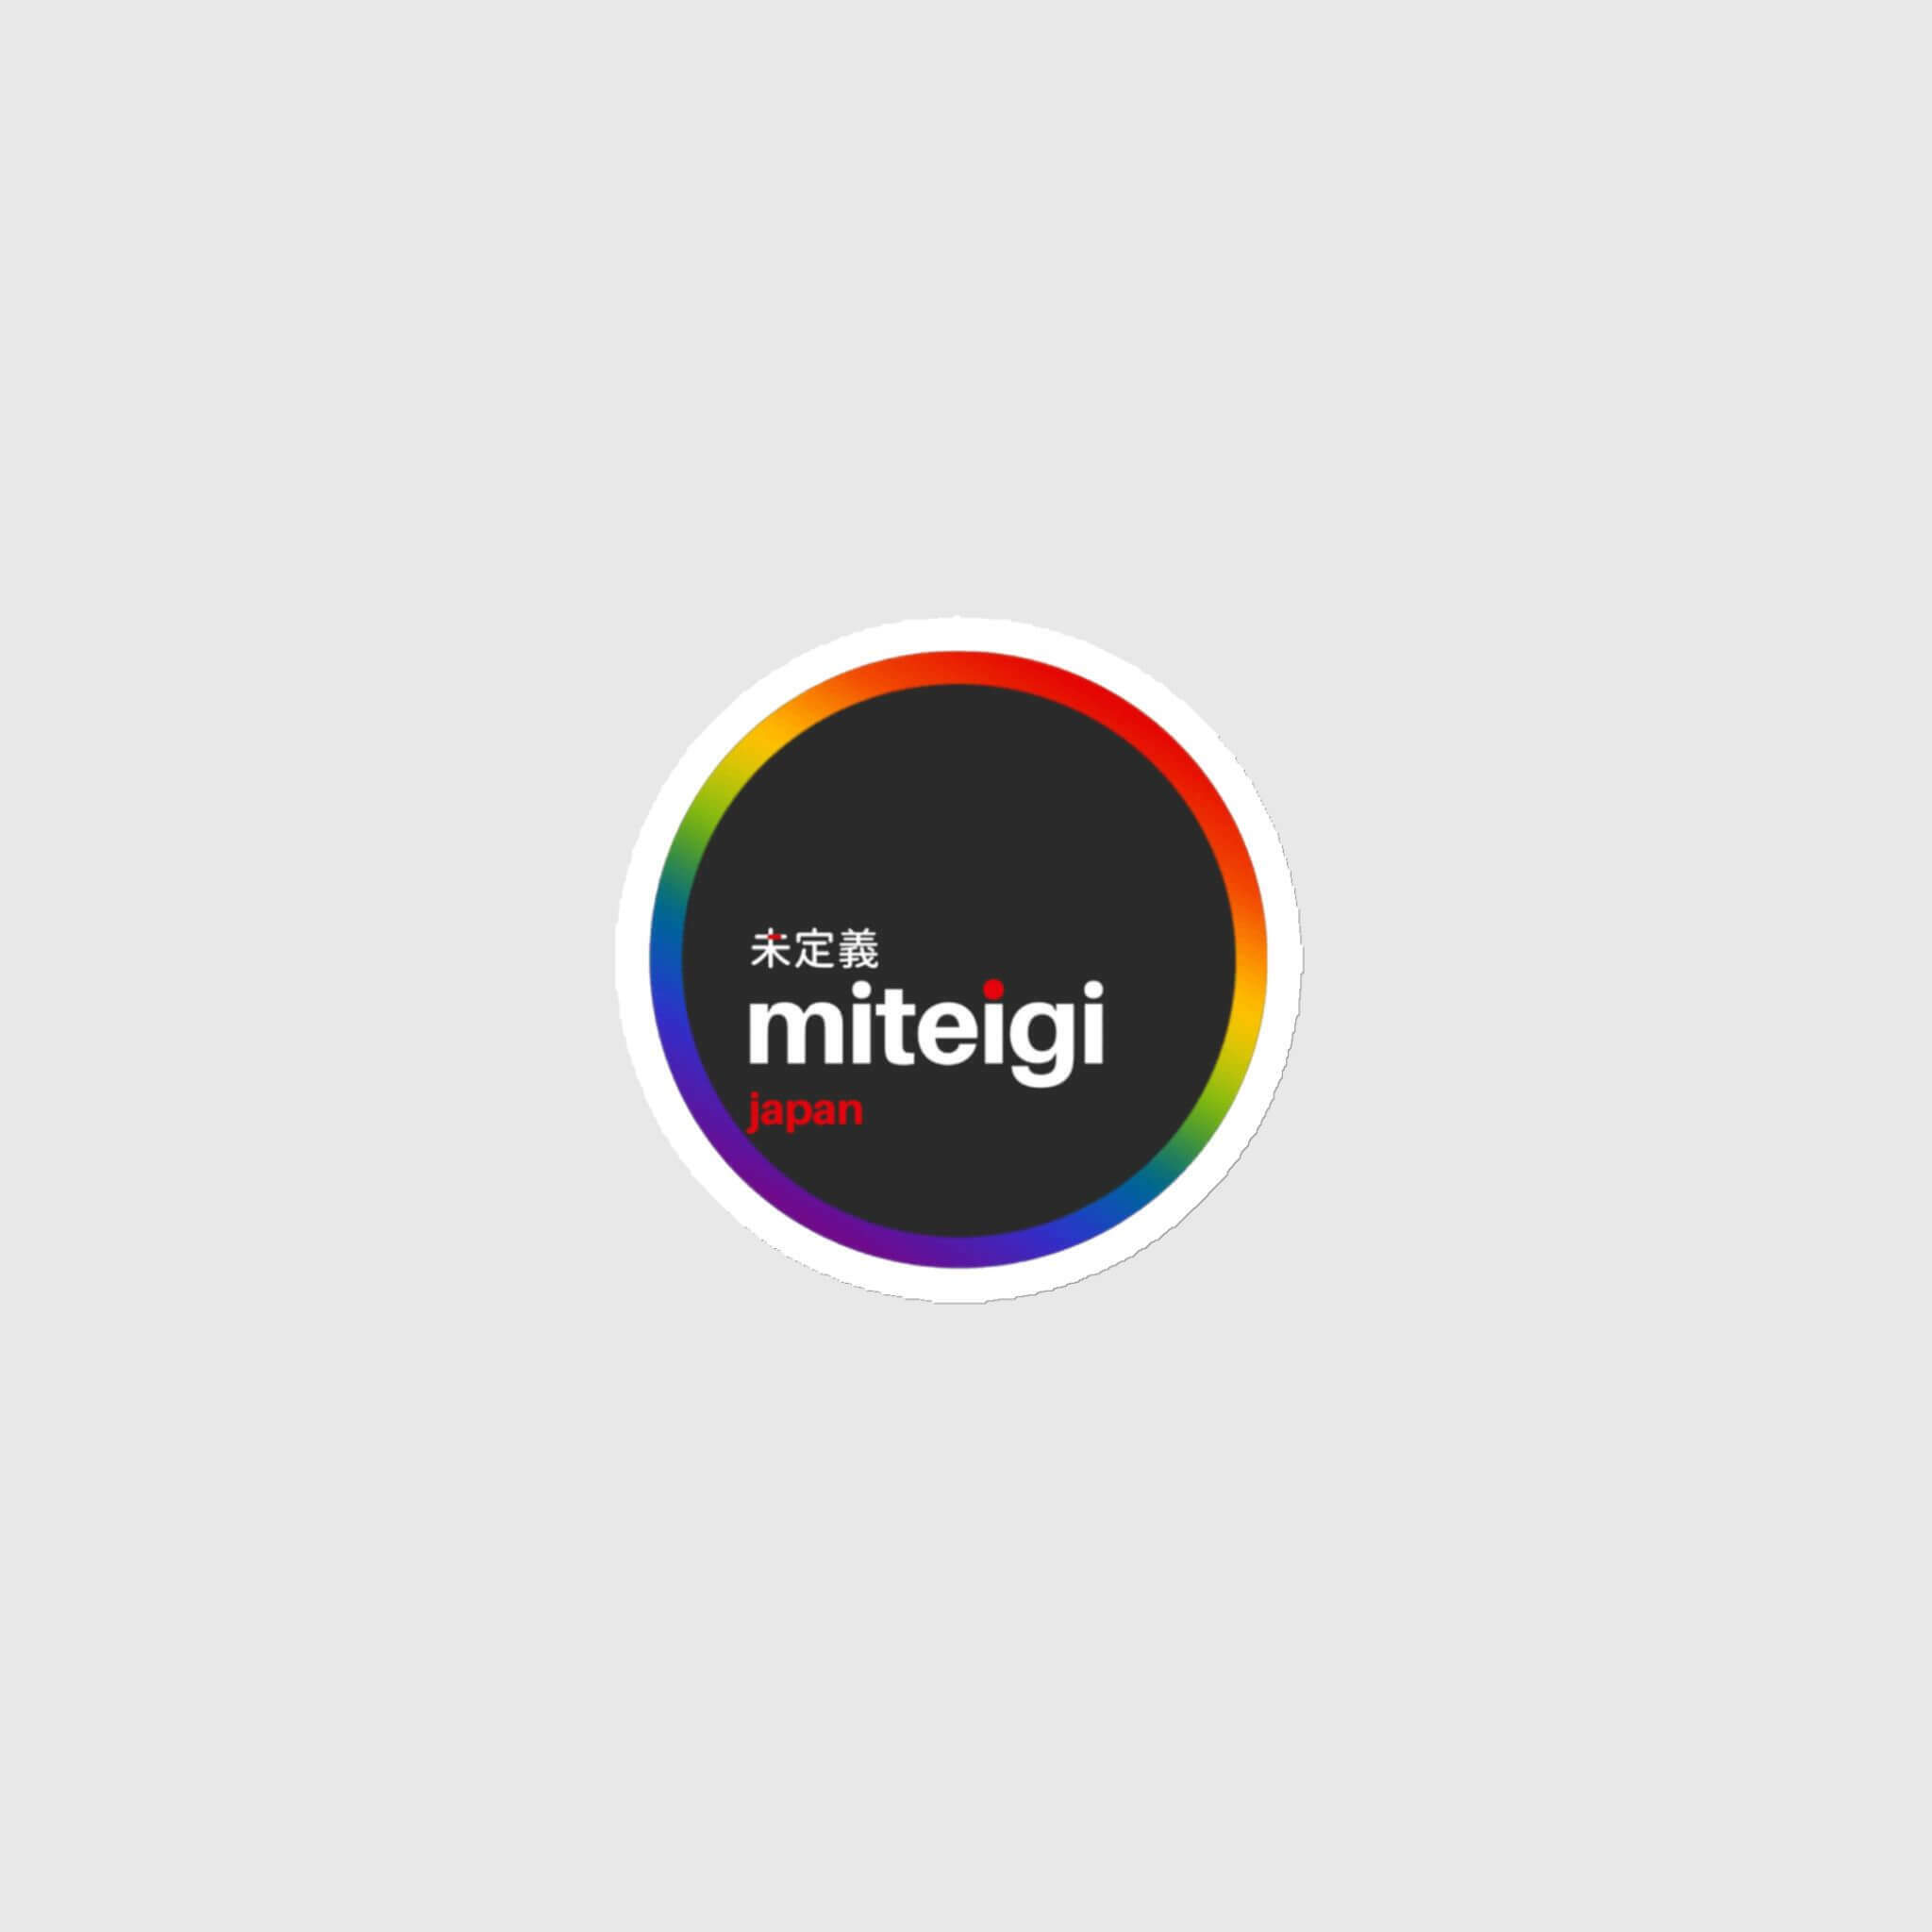 miteigi Pride Logo Magnet unisex rainbow women’s men’s miteigi-Logo Branded product item office fridge magnets LBGTQ+ accessories for man woman girls boys